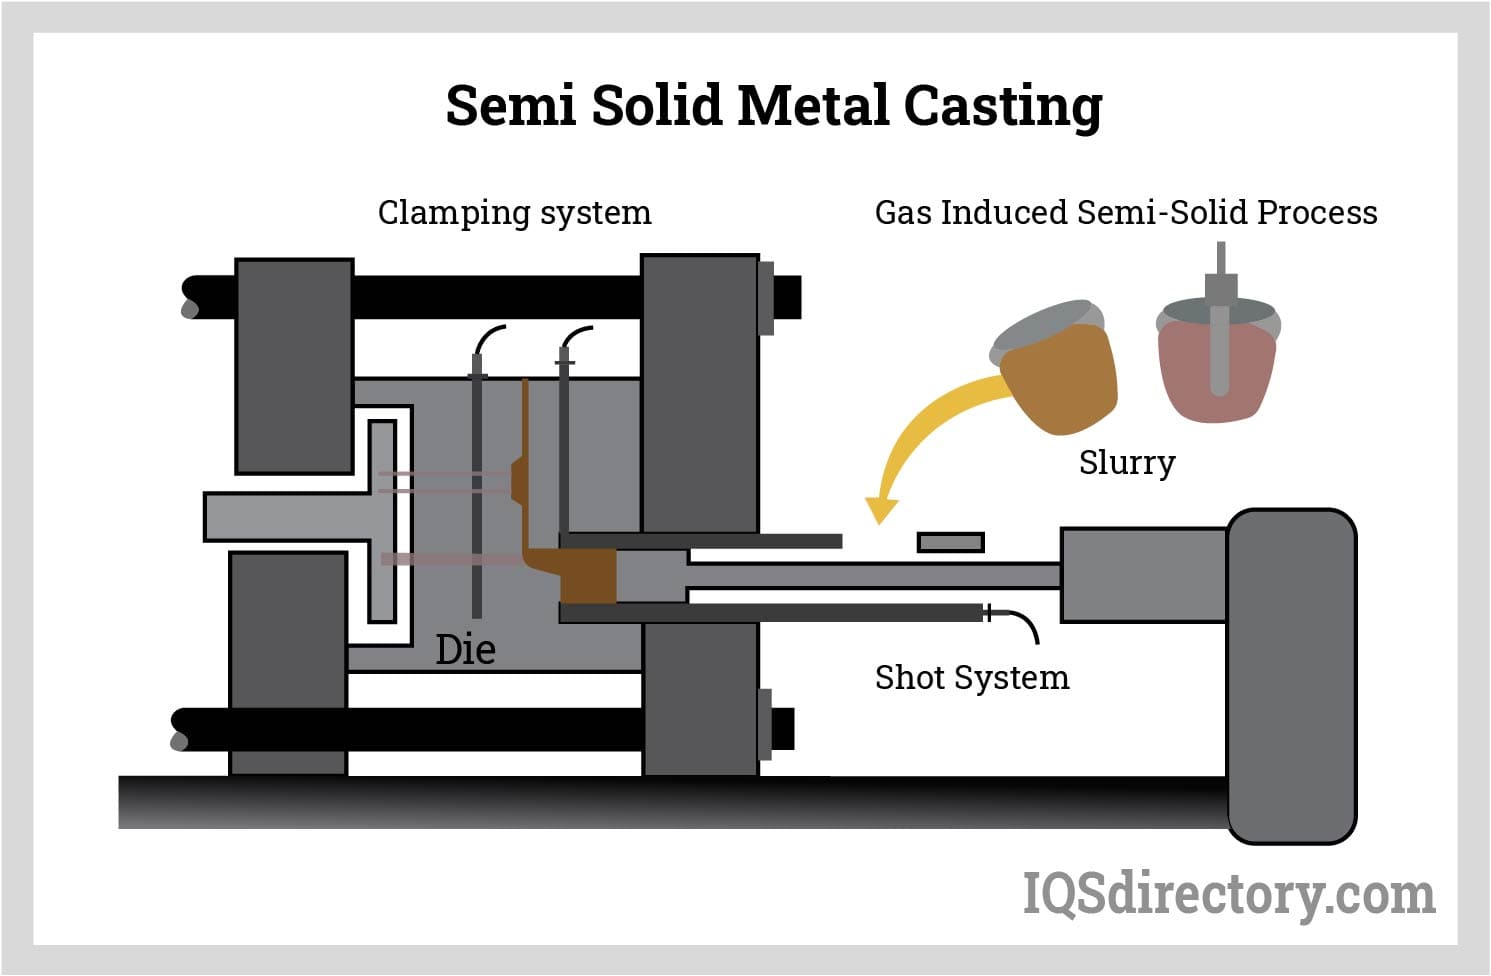 Semi Solid Metal Casting